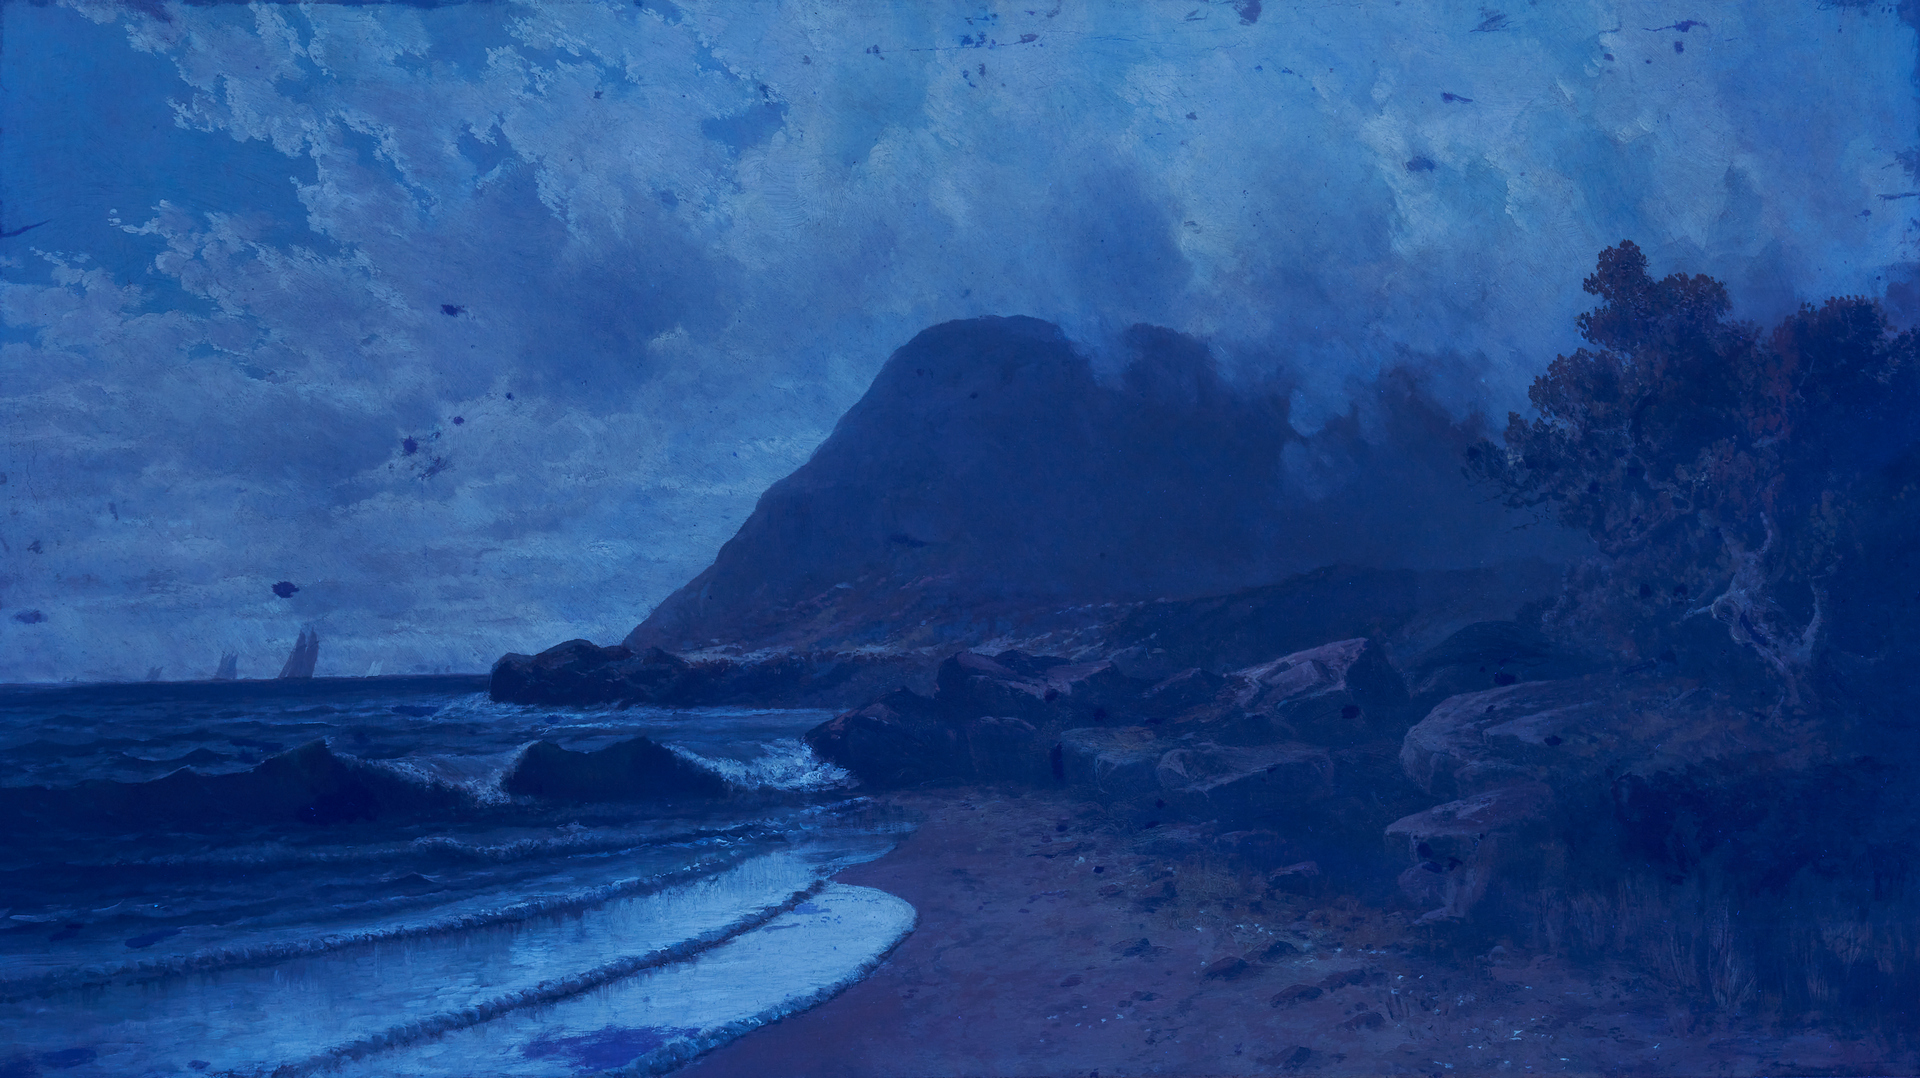 Lot 378: Attr. Alfred Bricher O/C, Coastal Landscape